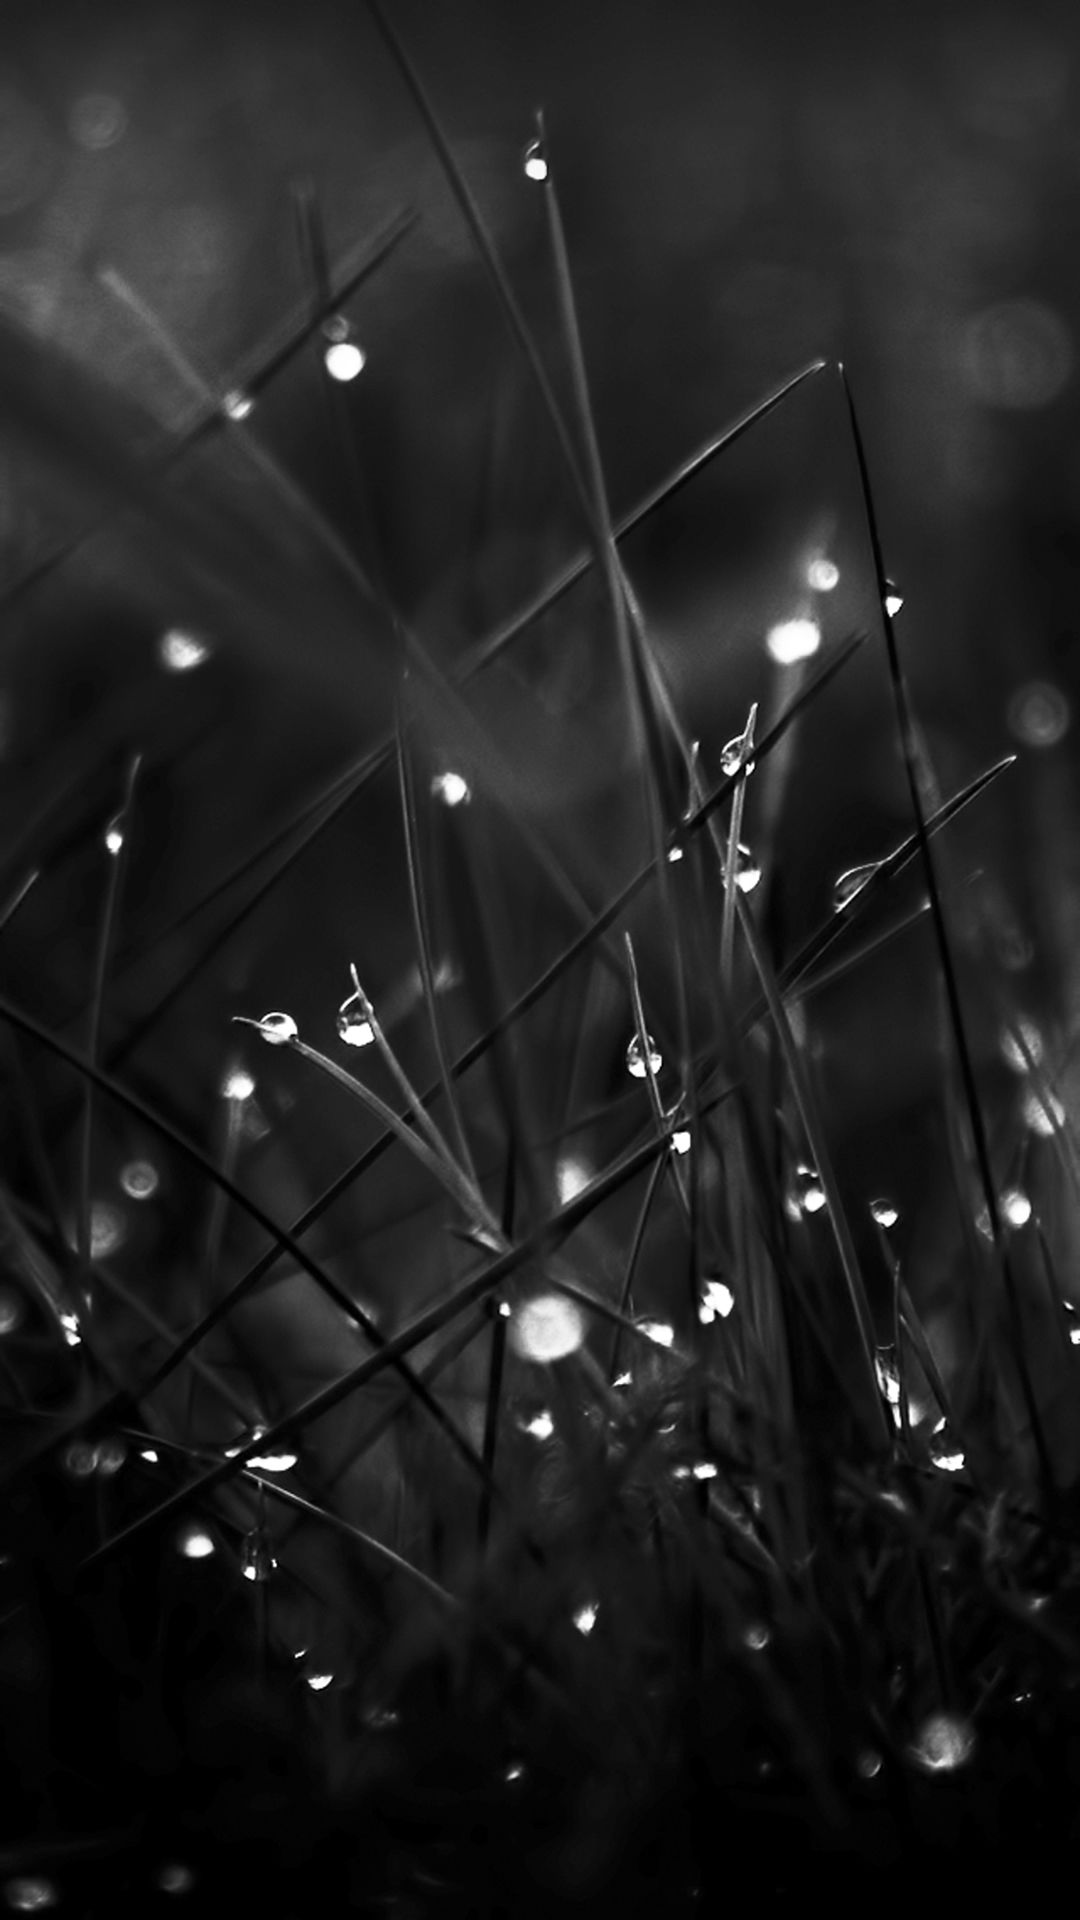 Dark Dew Morning Leafy Grass Landscape iPhone 6 Wallpaper Download ...